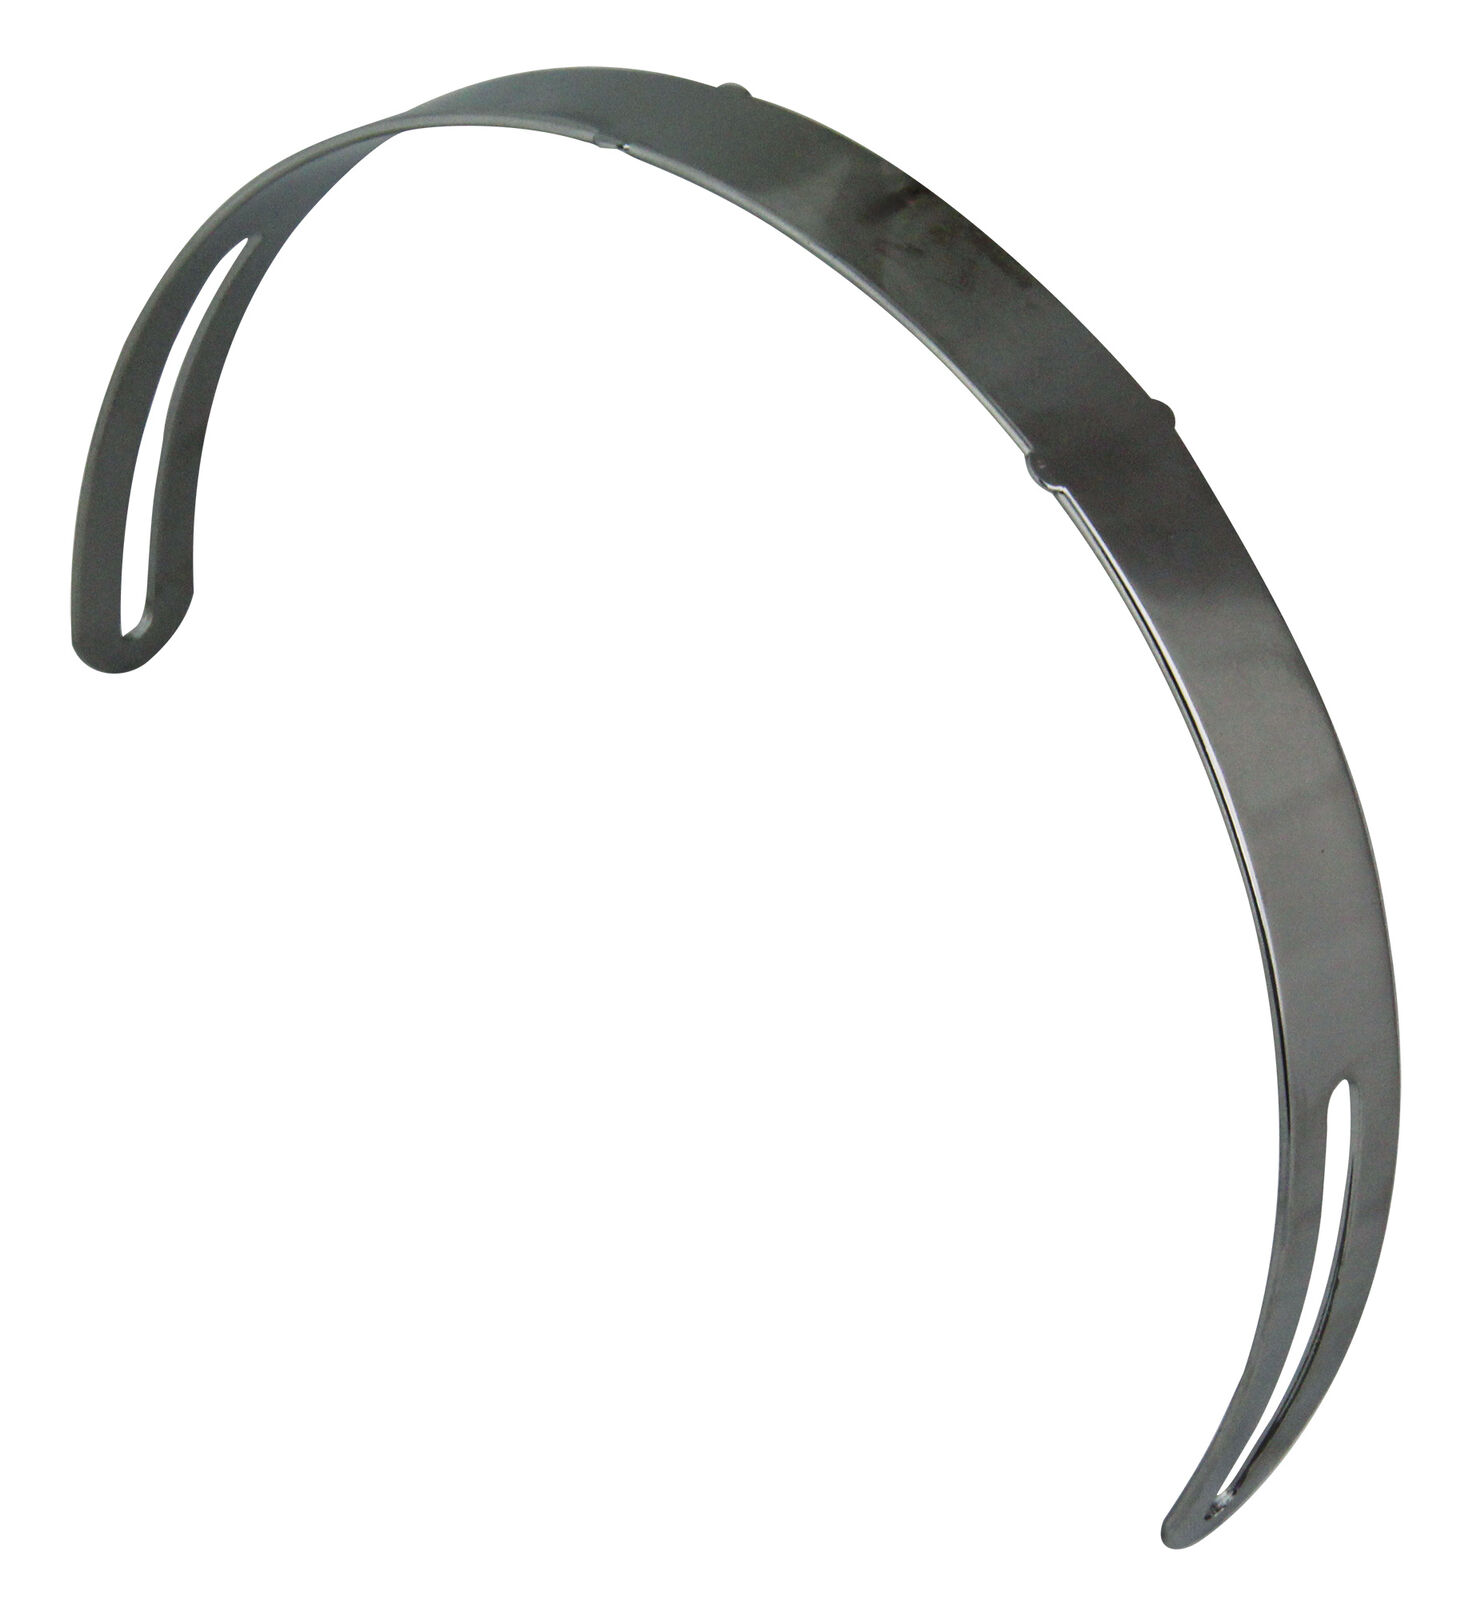 Original David Clark Replacement Headband p 25630P-01 n 55% mart OFF Spring